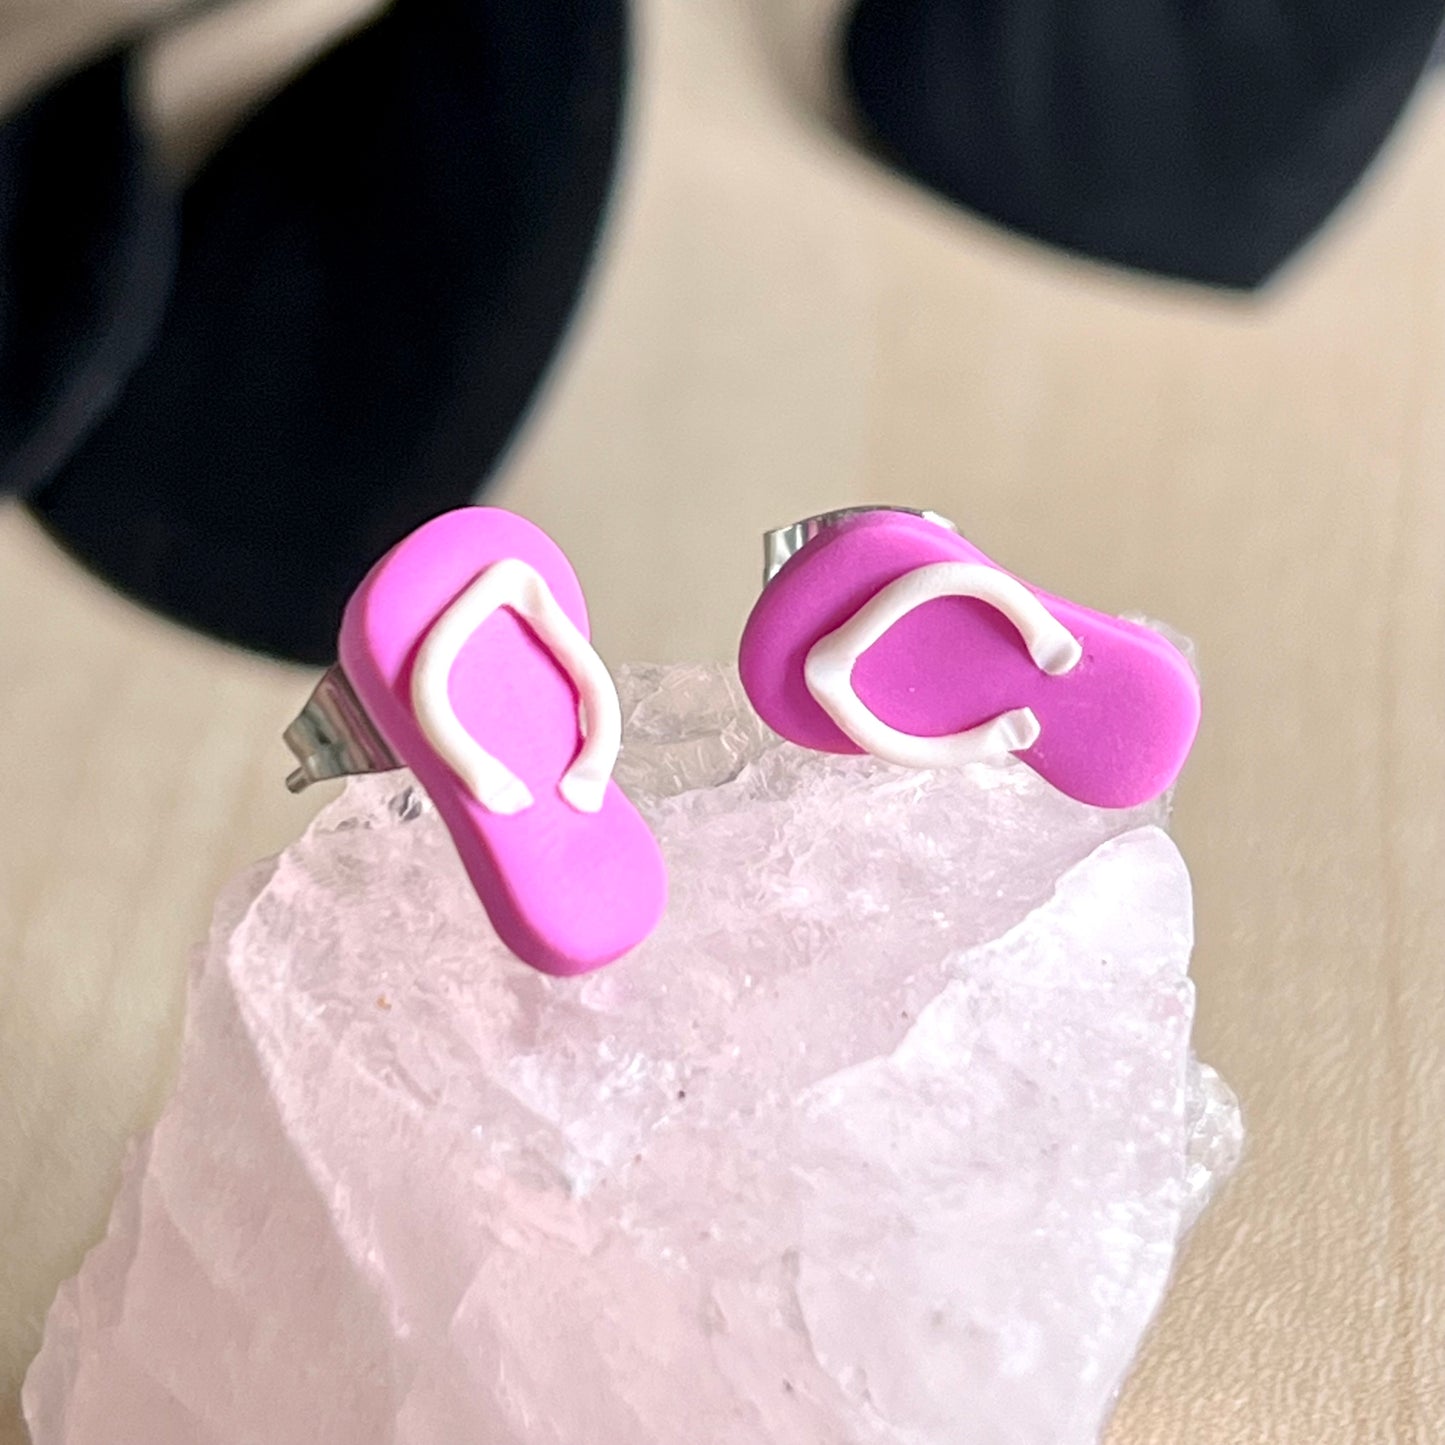 Thongs / flip flops studs, pink with white, handmade earrings